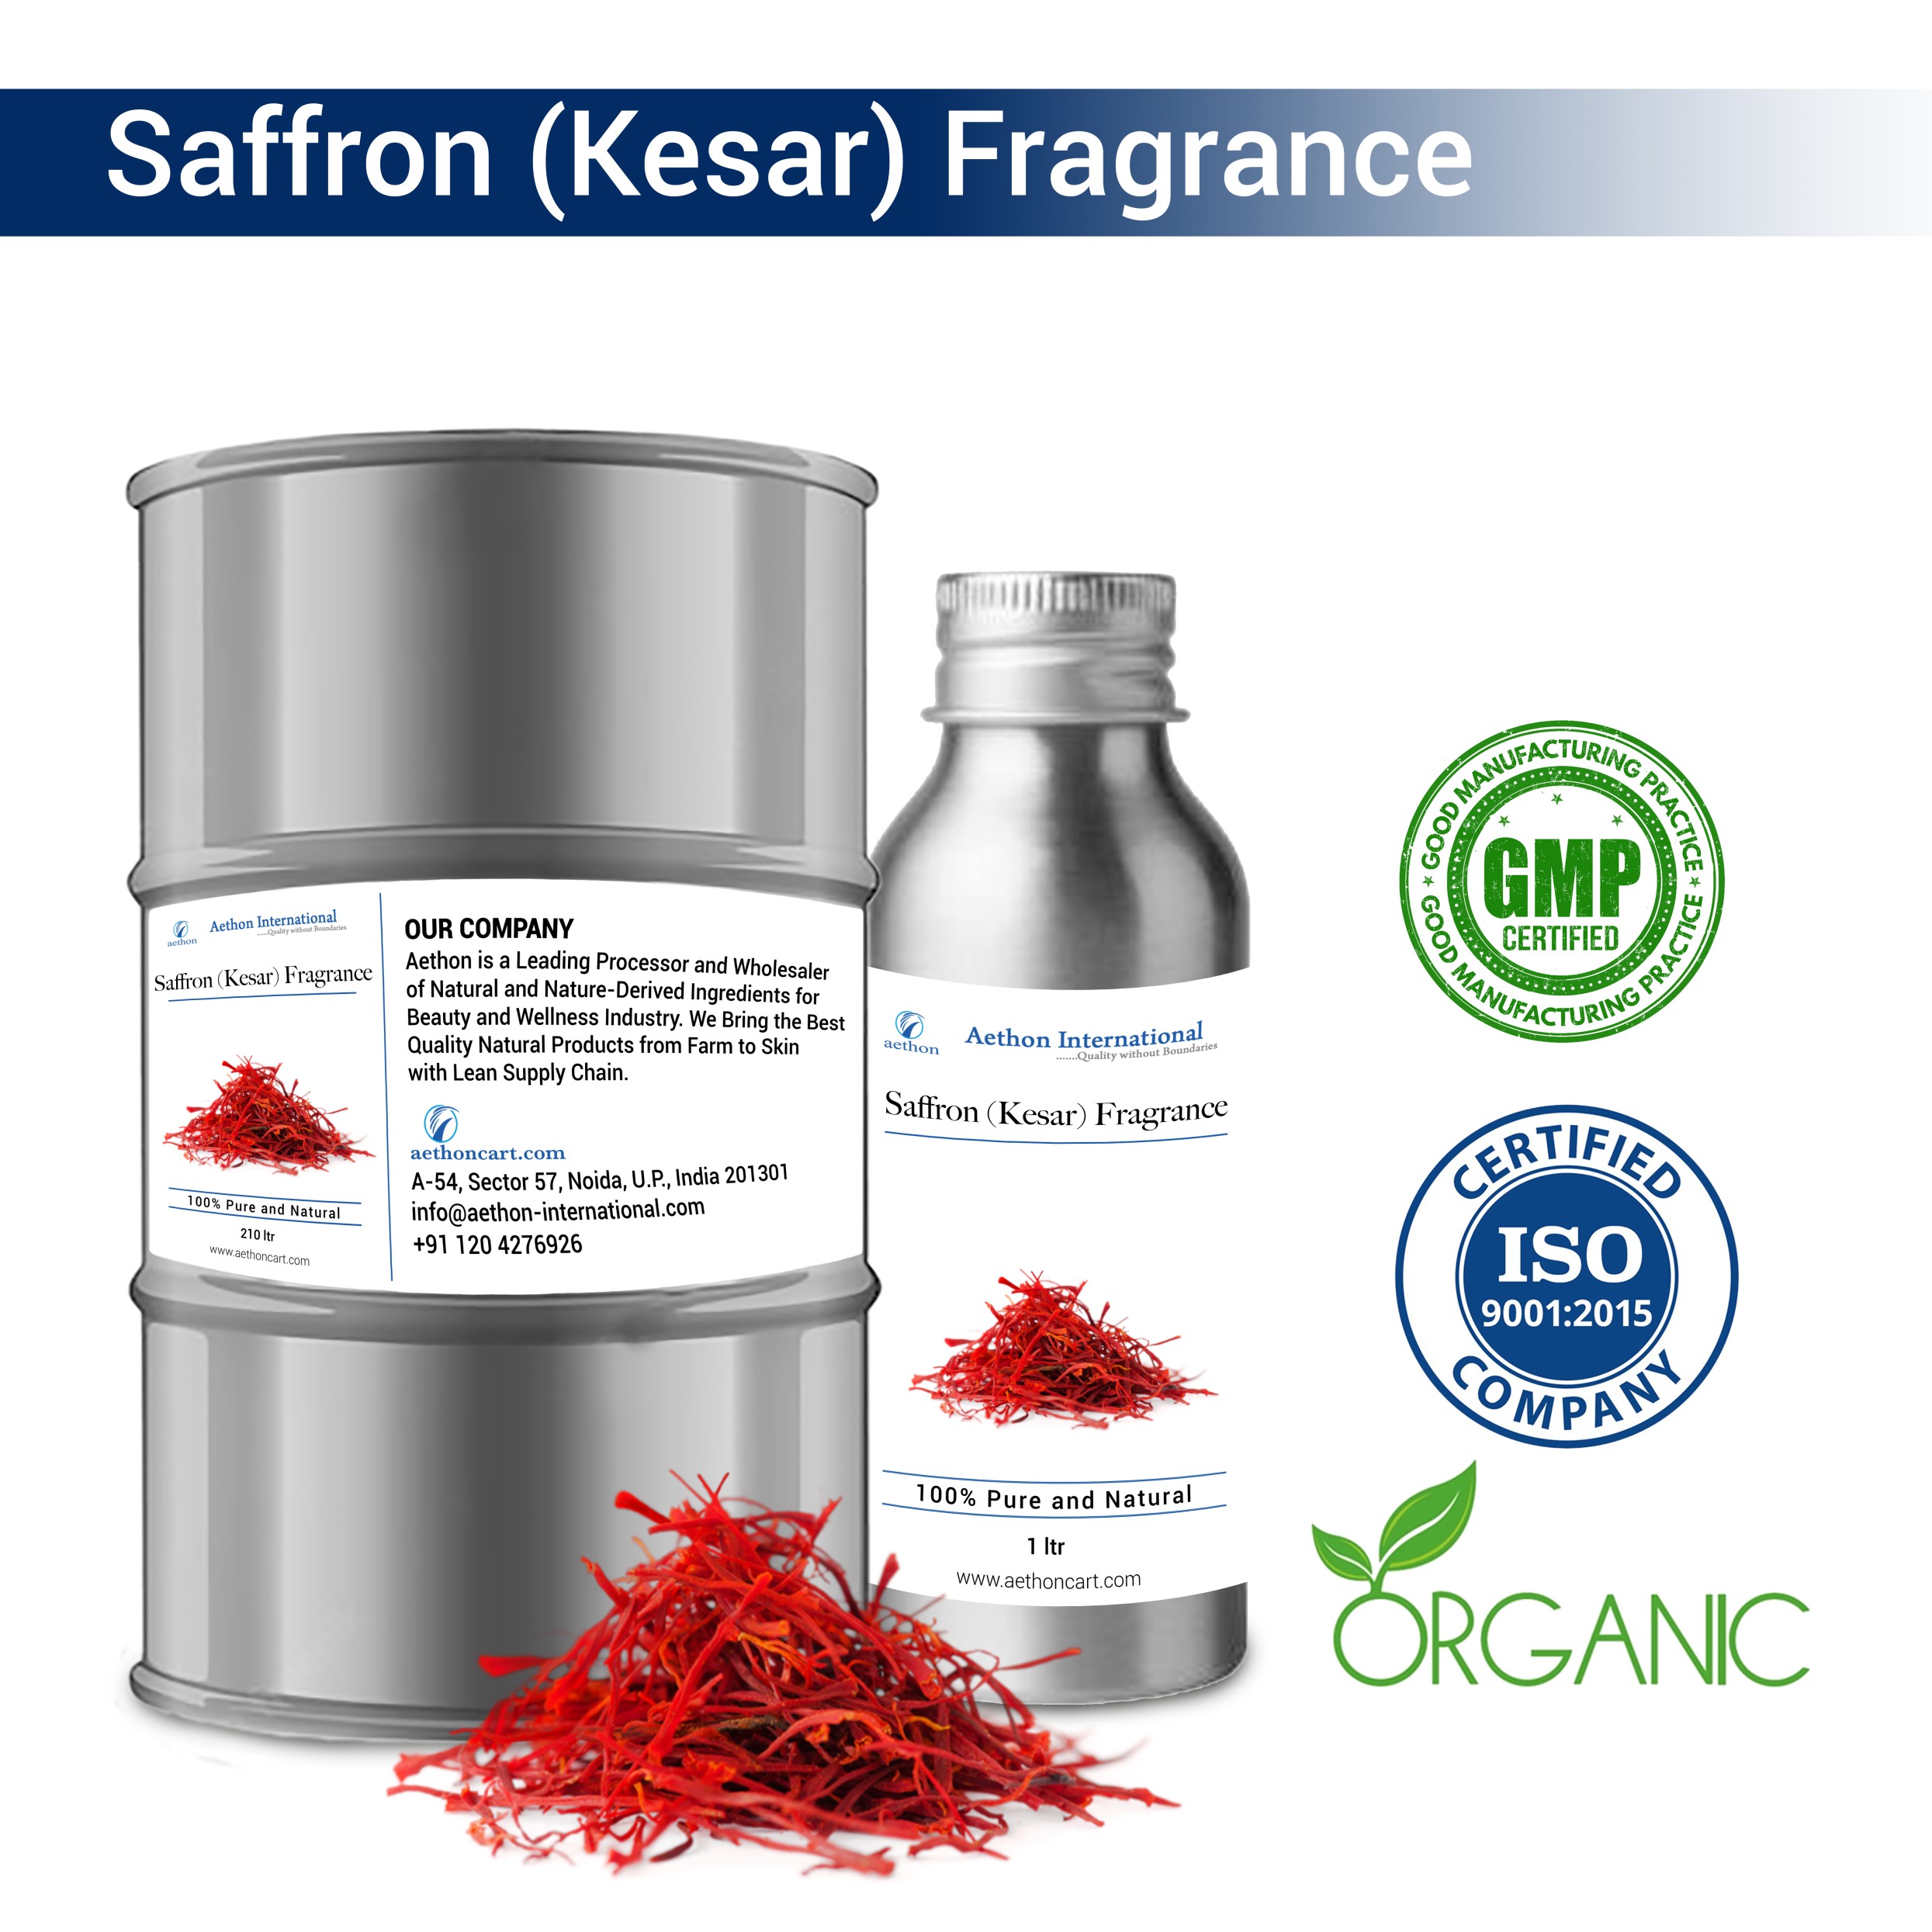 Saffron (Kesar) Fragrances (WS)